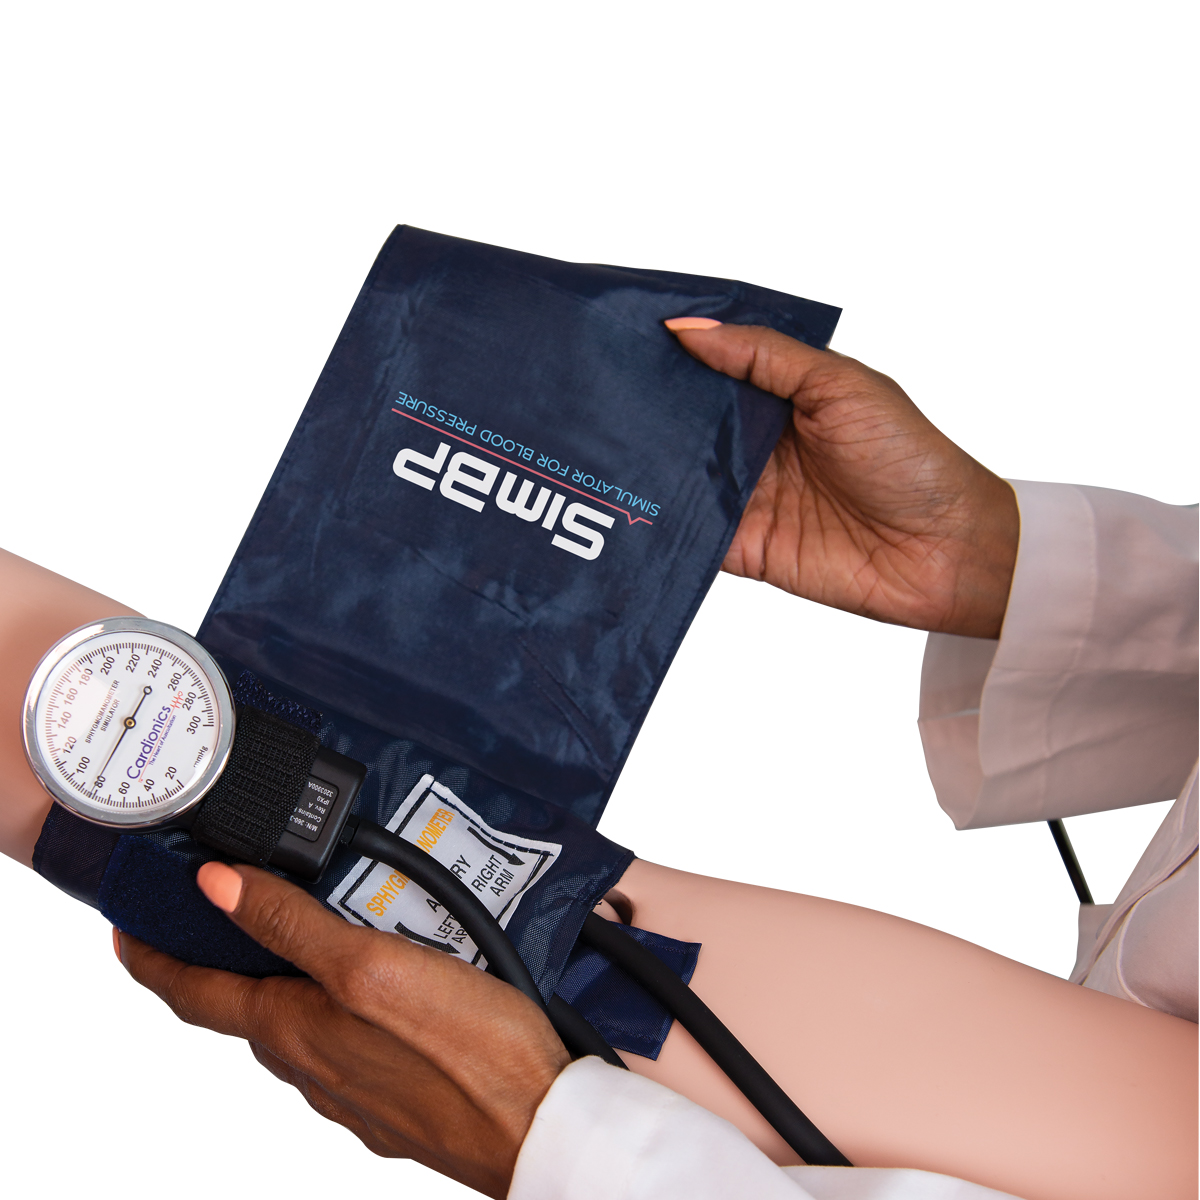 Advanced Blood Pressure Measurement Training Arm Simulator, Blood Pressure  Training Arm Simulator, Practice Arm Blood Pressure Measurement Model for